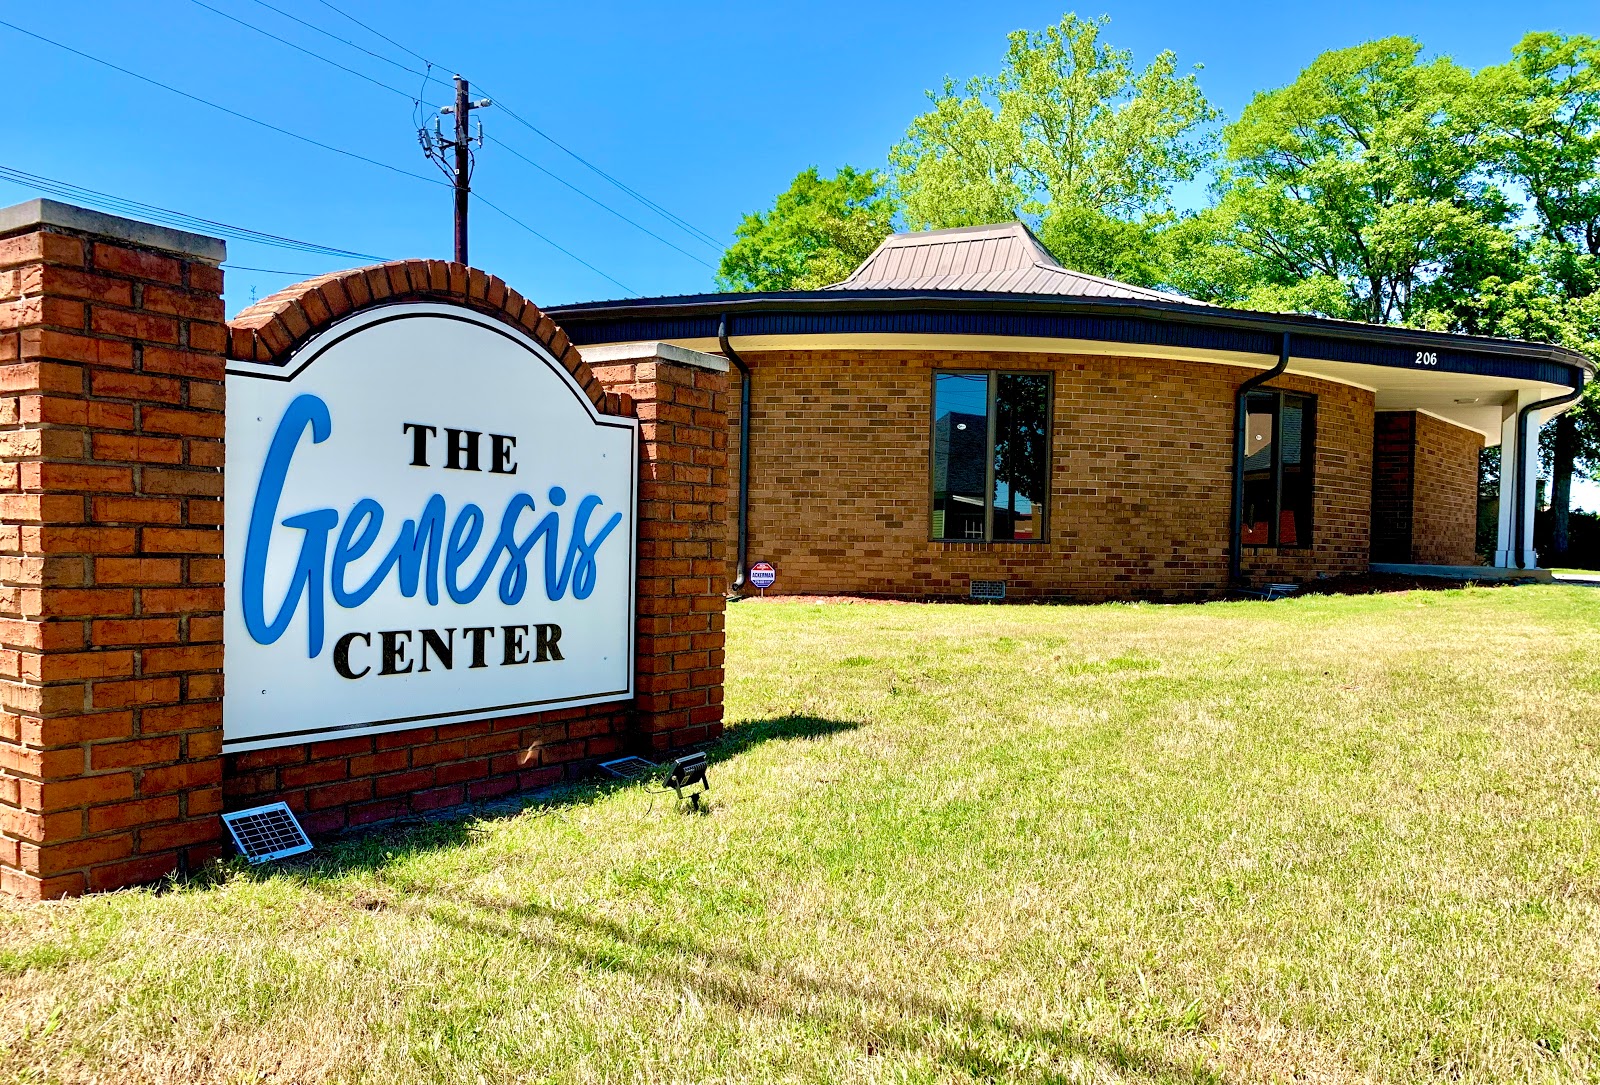 Genesis Center of Winder